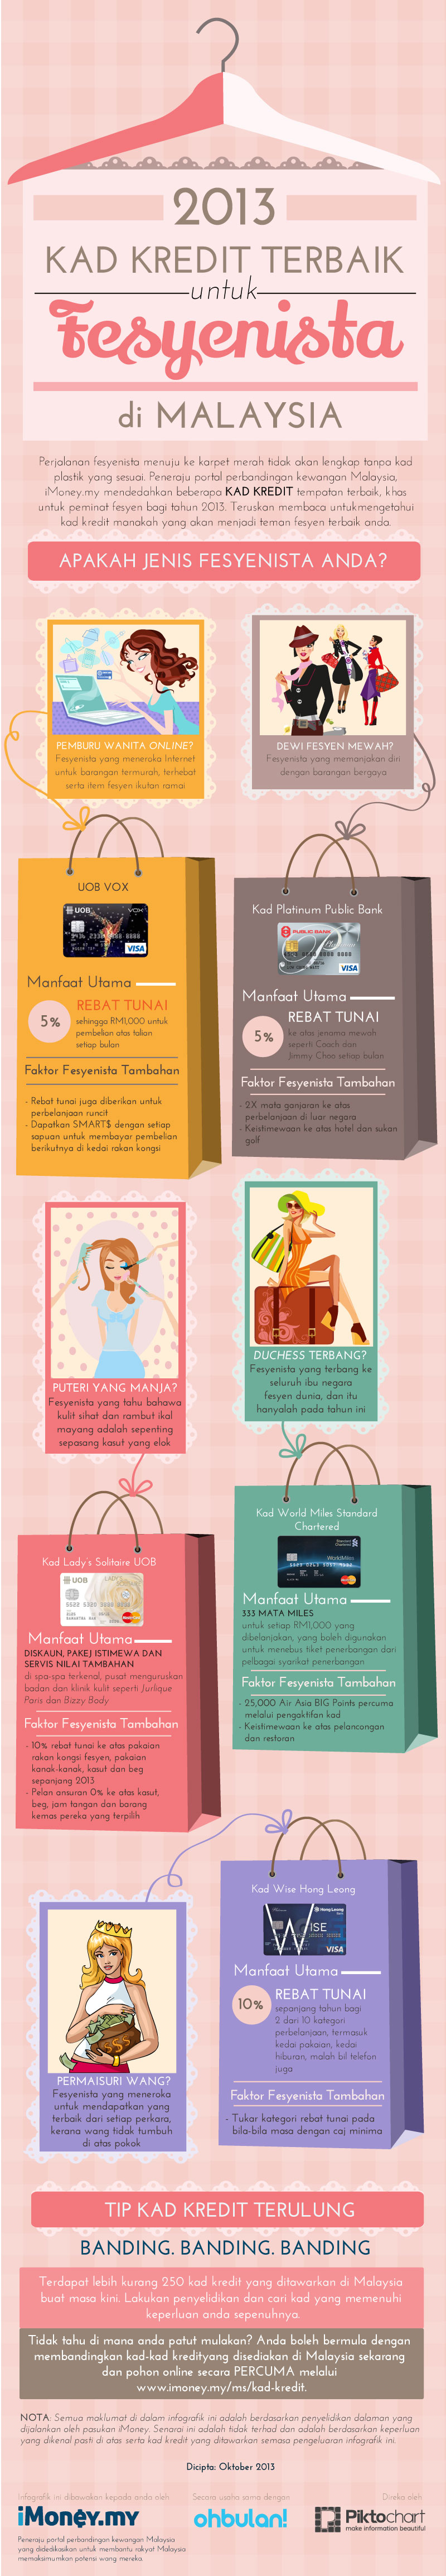 Infographic : Kad Kredit Terbaik Untuk Fesyenista 2013